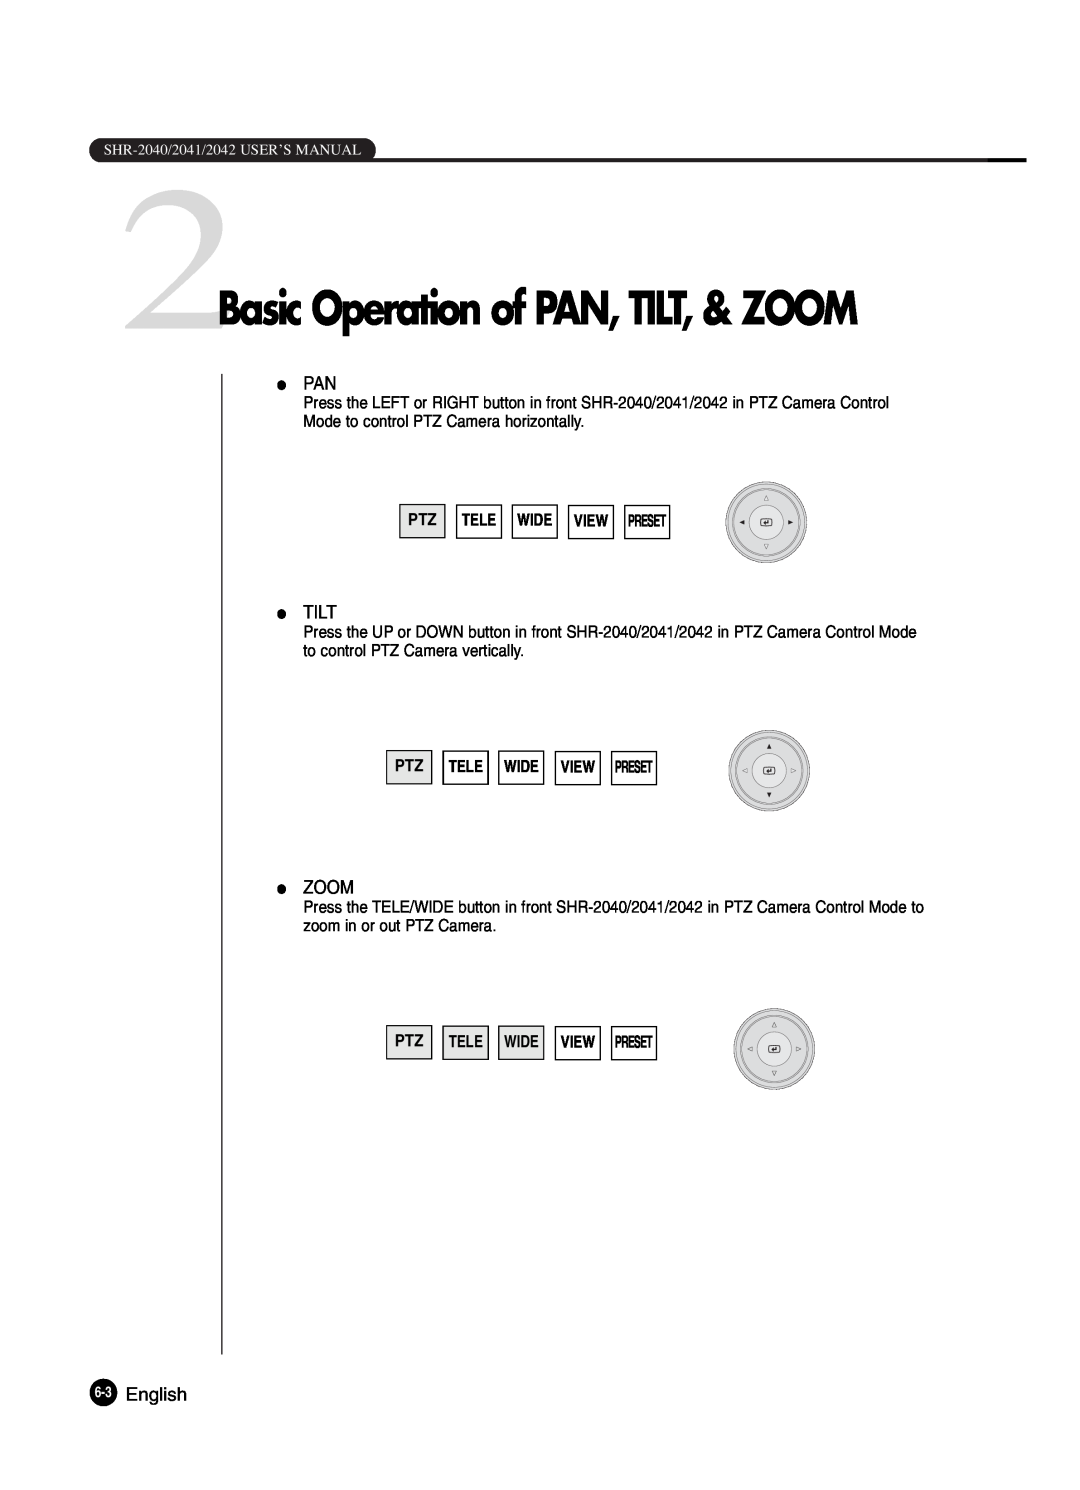 Samsung SHR-2042P250, SHR-2040P250 manual 2Basic Operation of PAN, TILT, & ZOOM, Ptz Tele Wide View Preset 